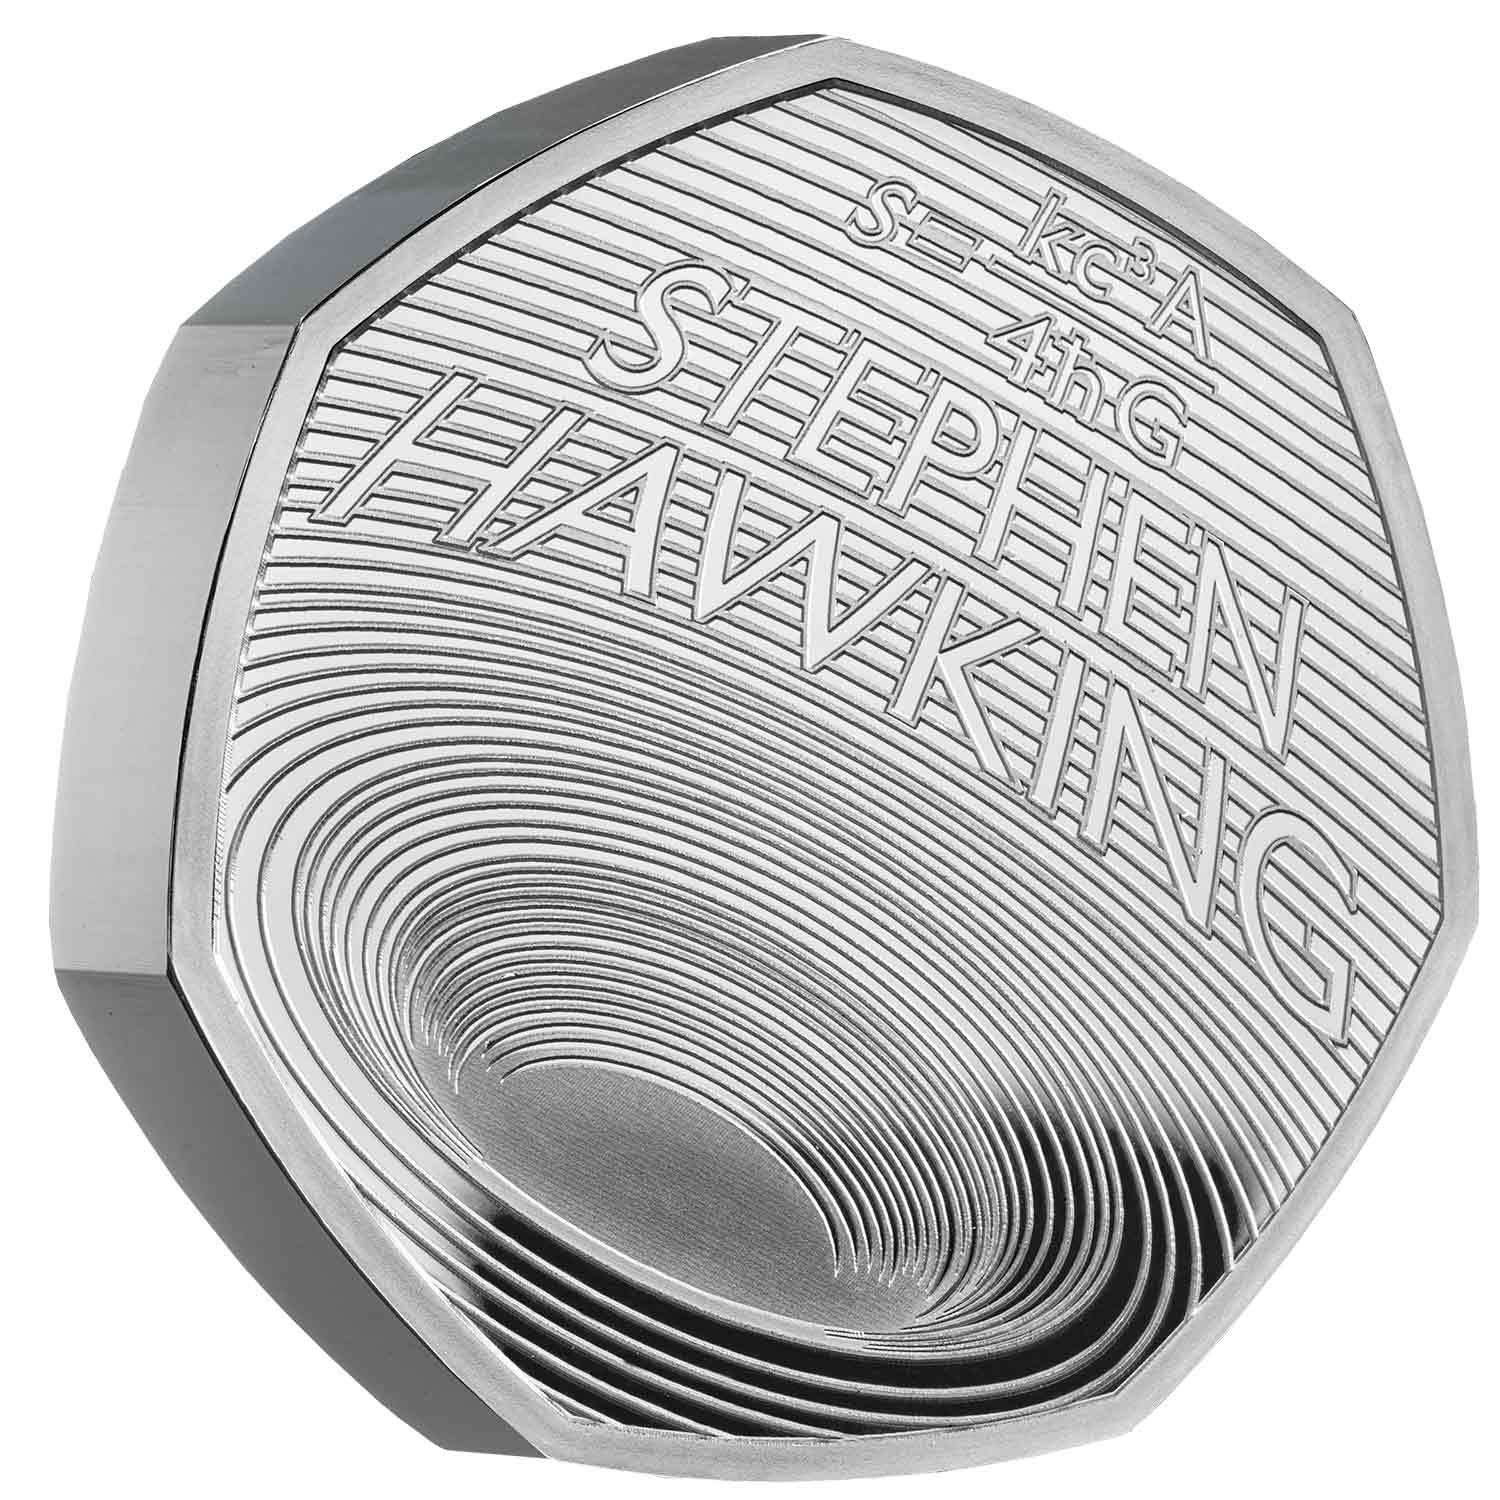 2019 Stephen Hawking 50p Coin BUNC Royal Mint Presentation Pack